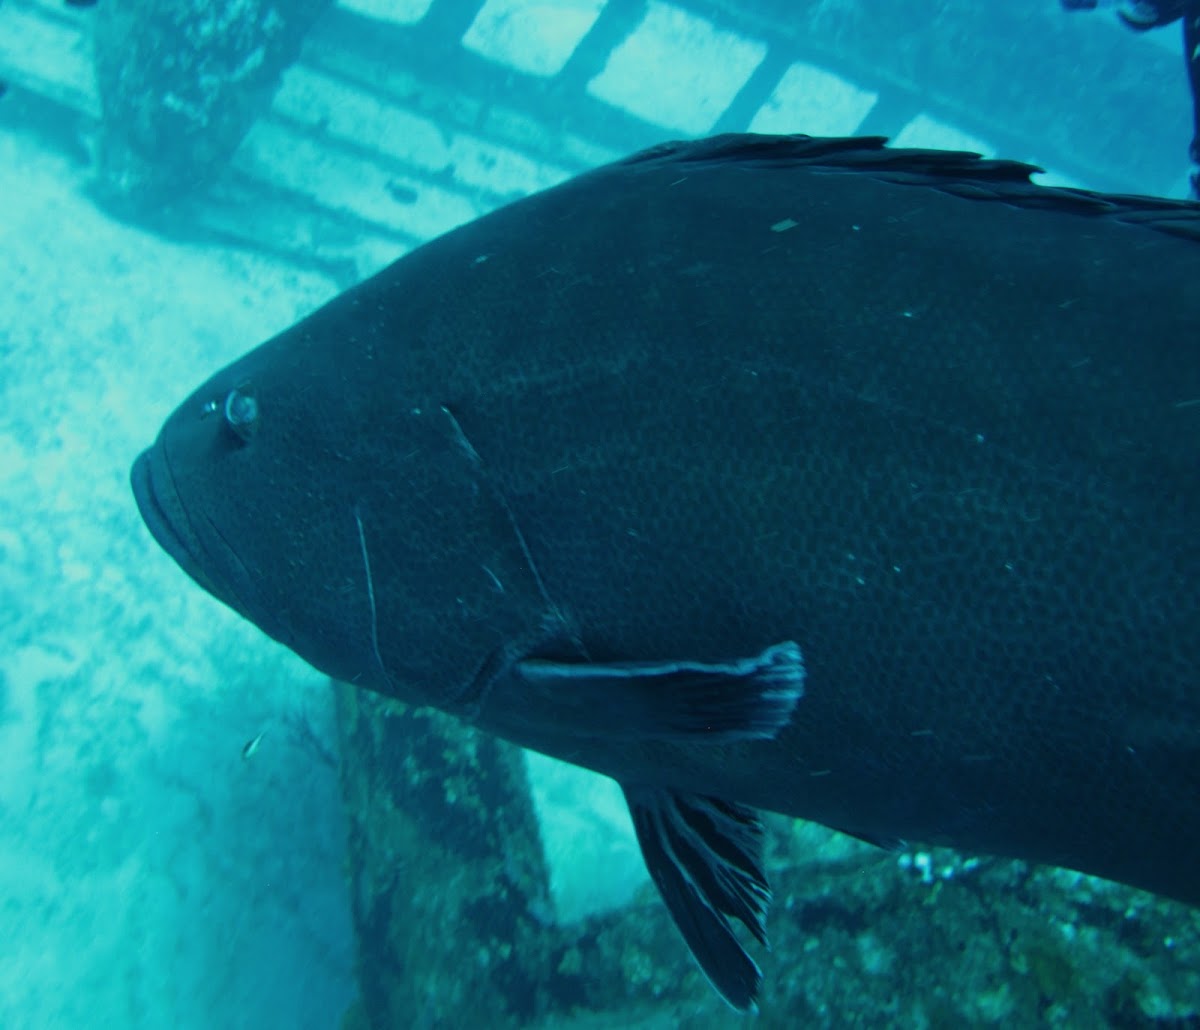 Black grouper